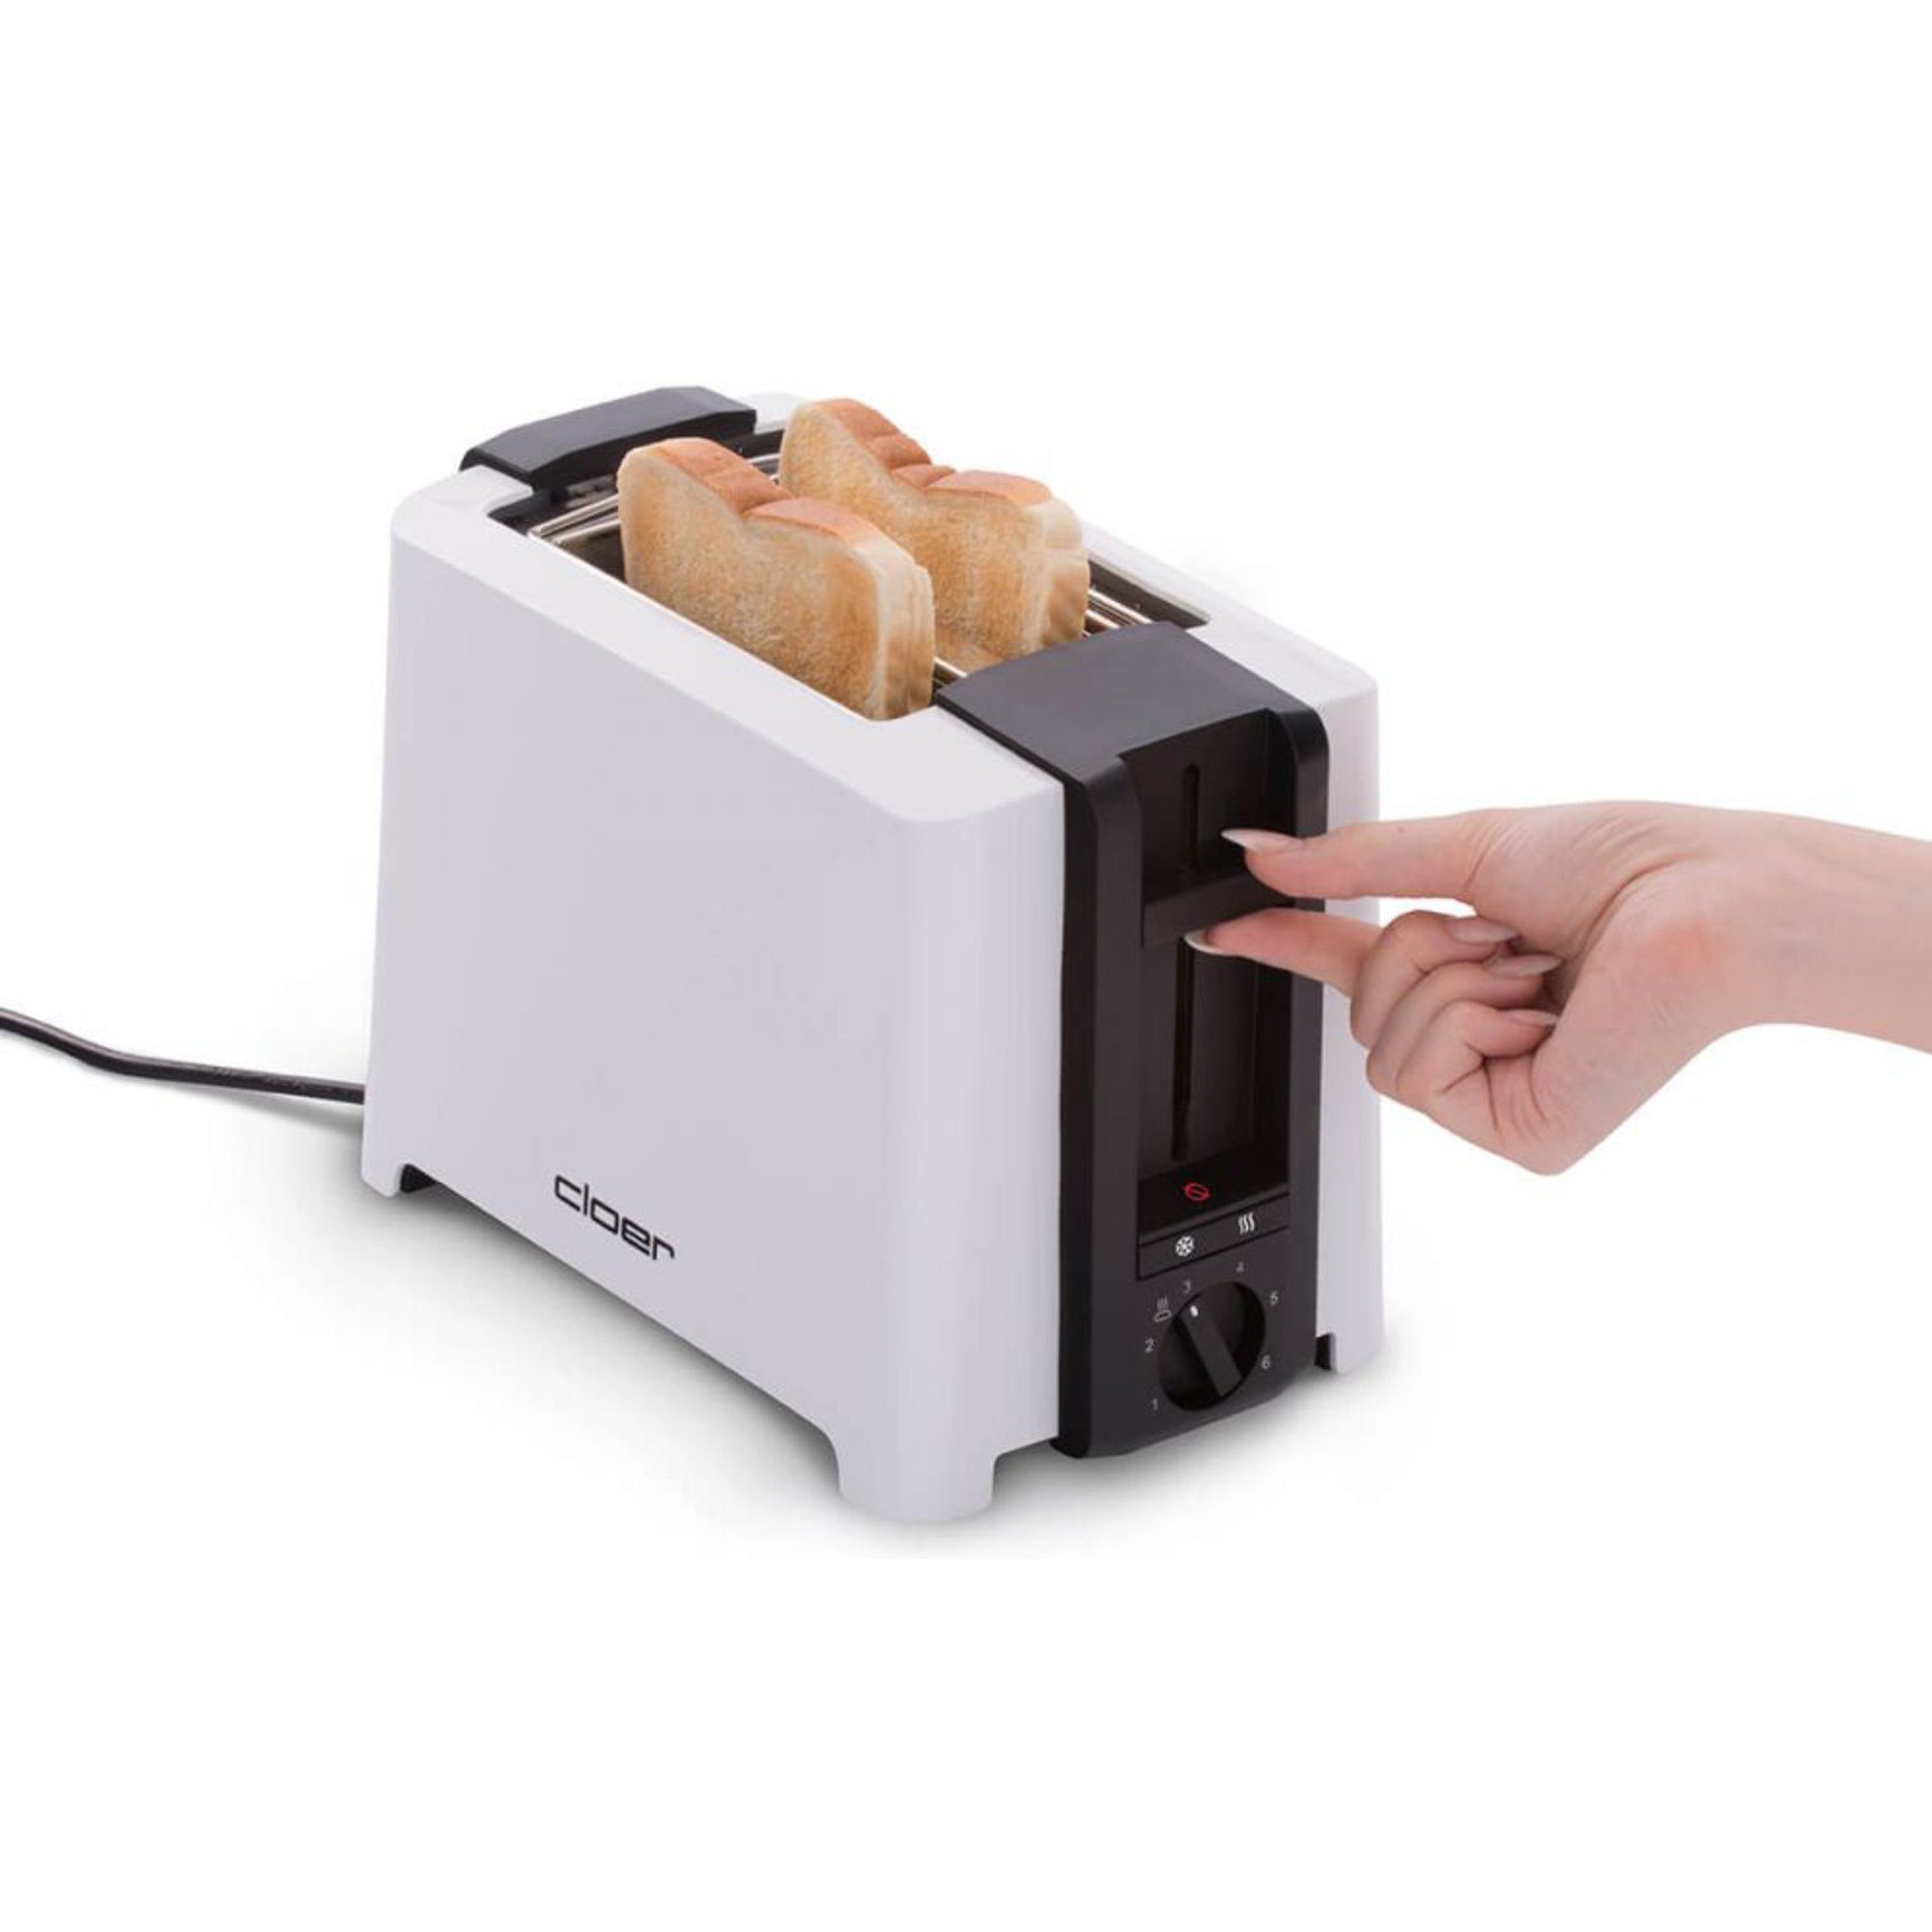 (900 3531, Cloer Cloer Watt, für Size Kaffeebereiter Full Toaster 2